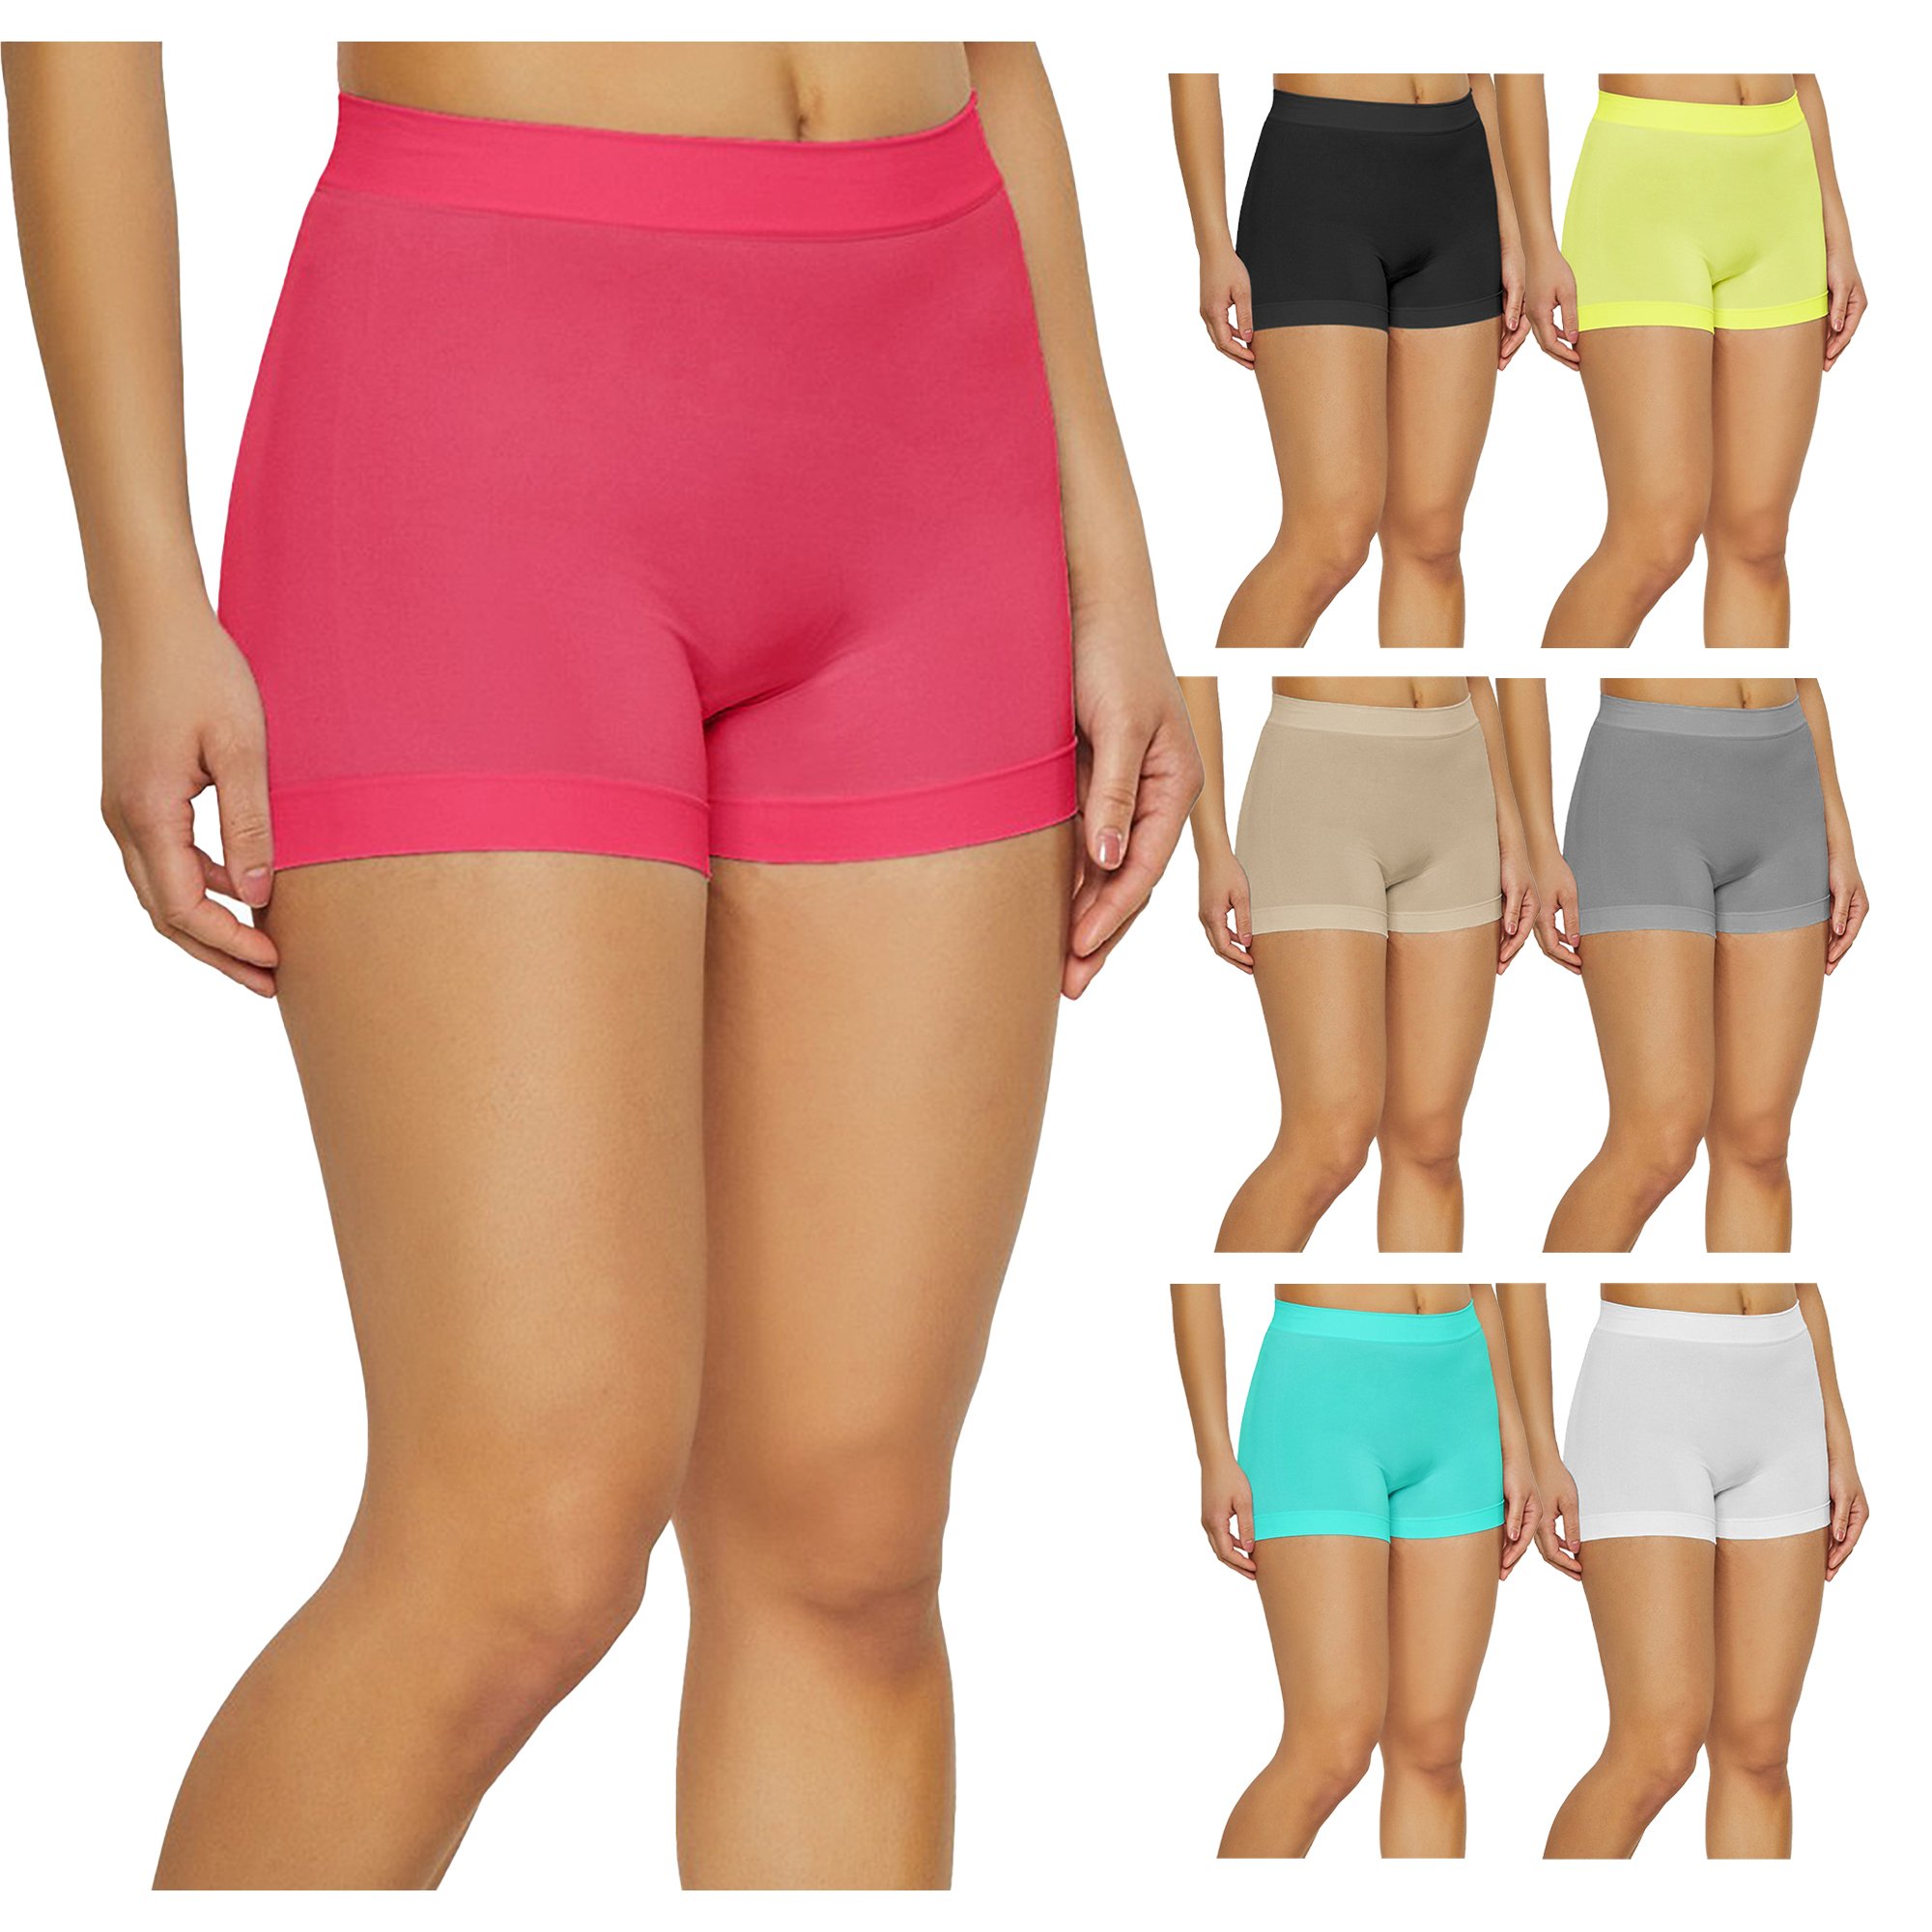 12-Pack Women's High Waisted Biker Bottom Shorts For Yoga Gym Running Ladies Pants - TEAL, S